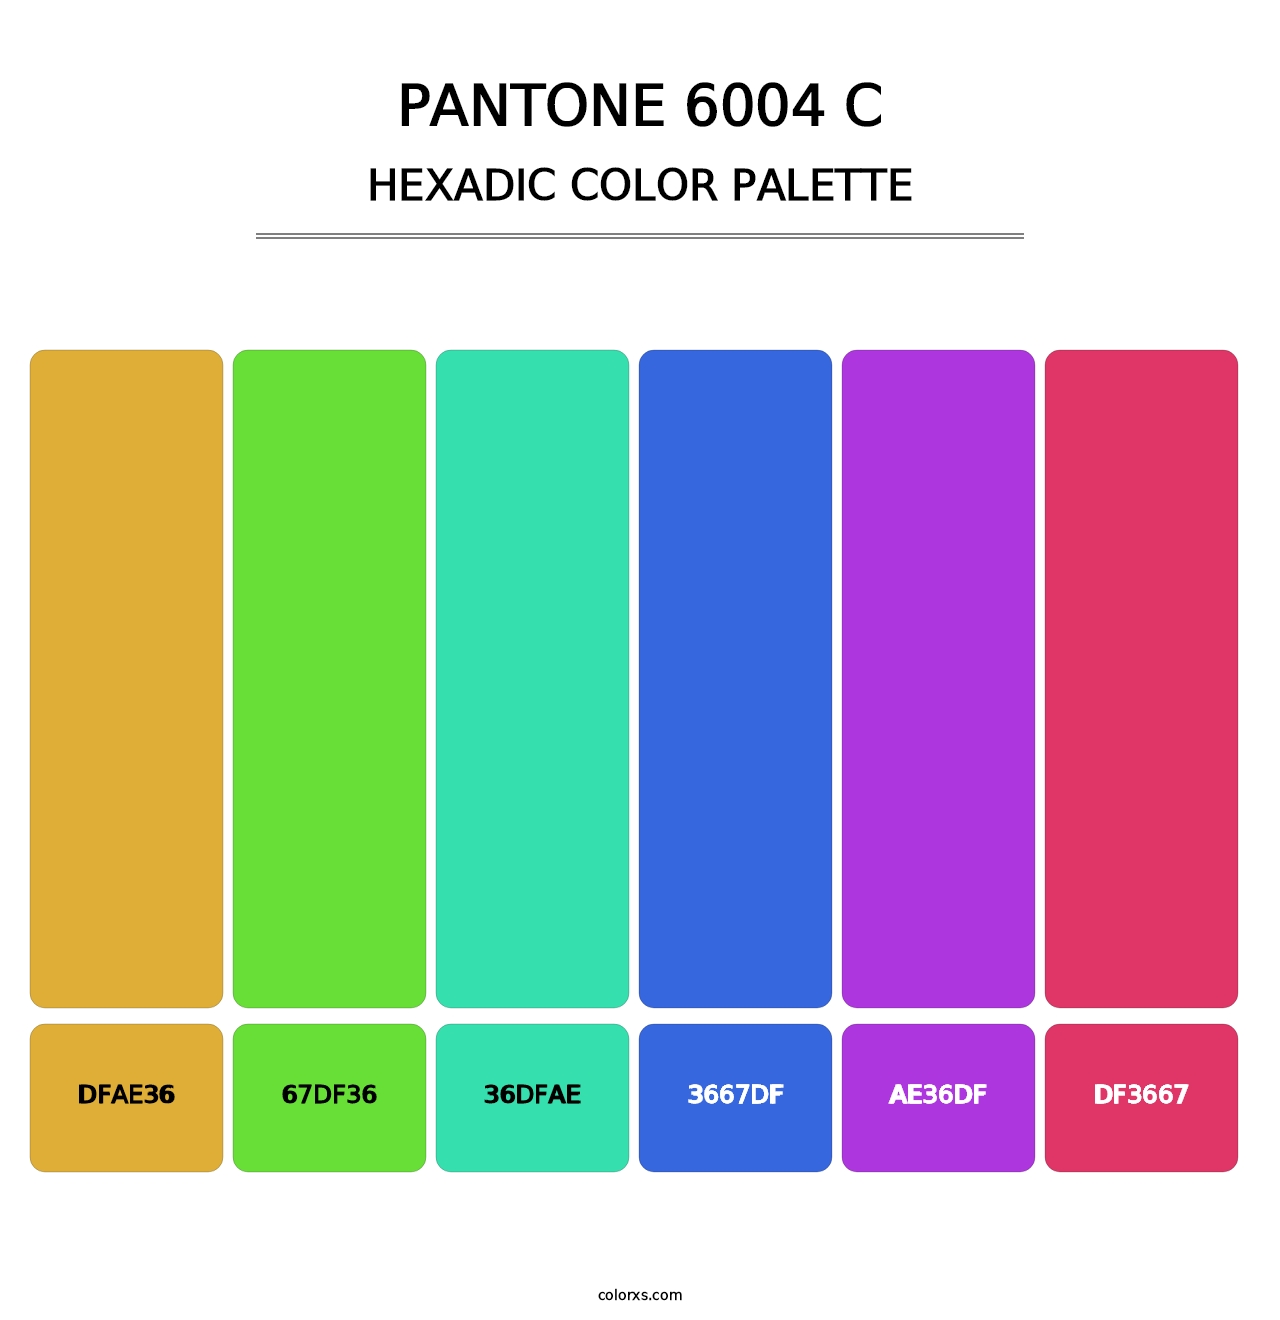 PANTONE 6004 C - Hexadic Color Palette